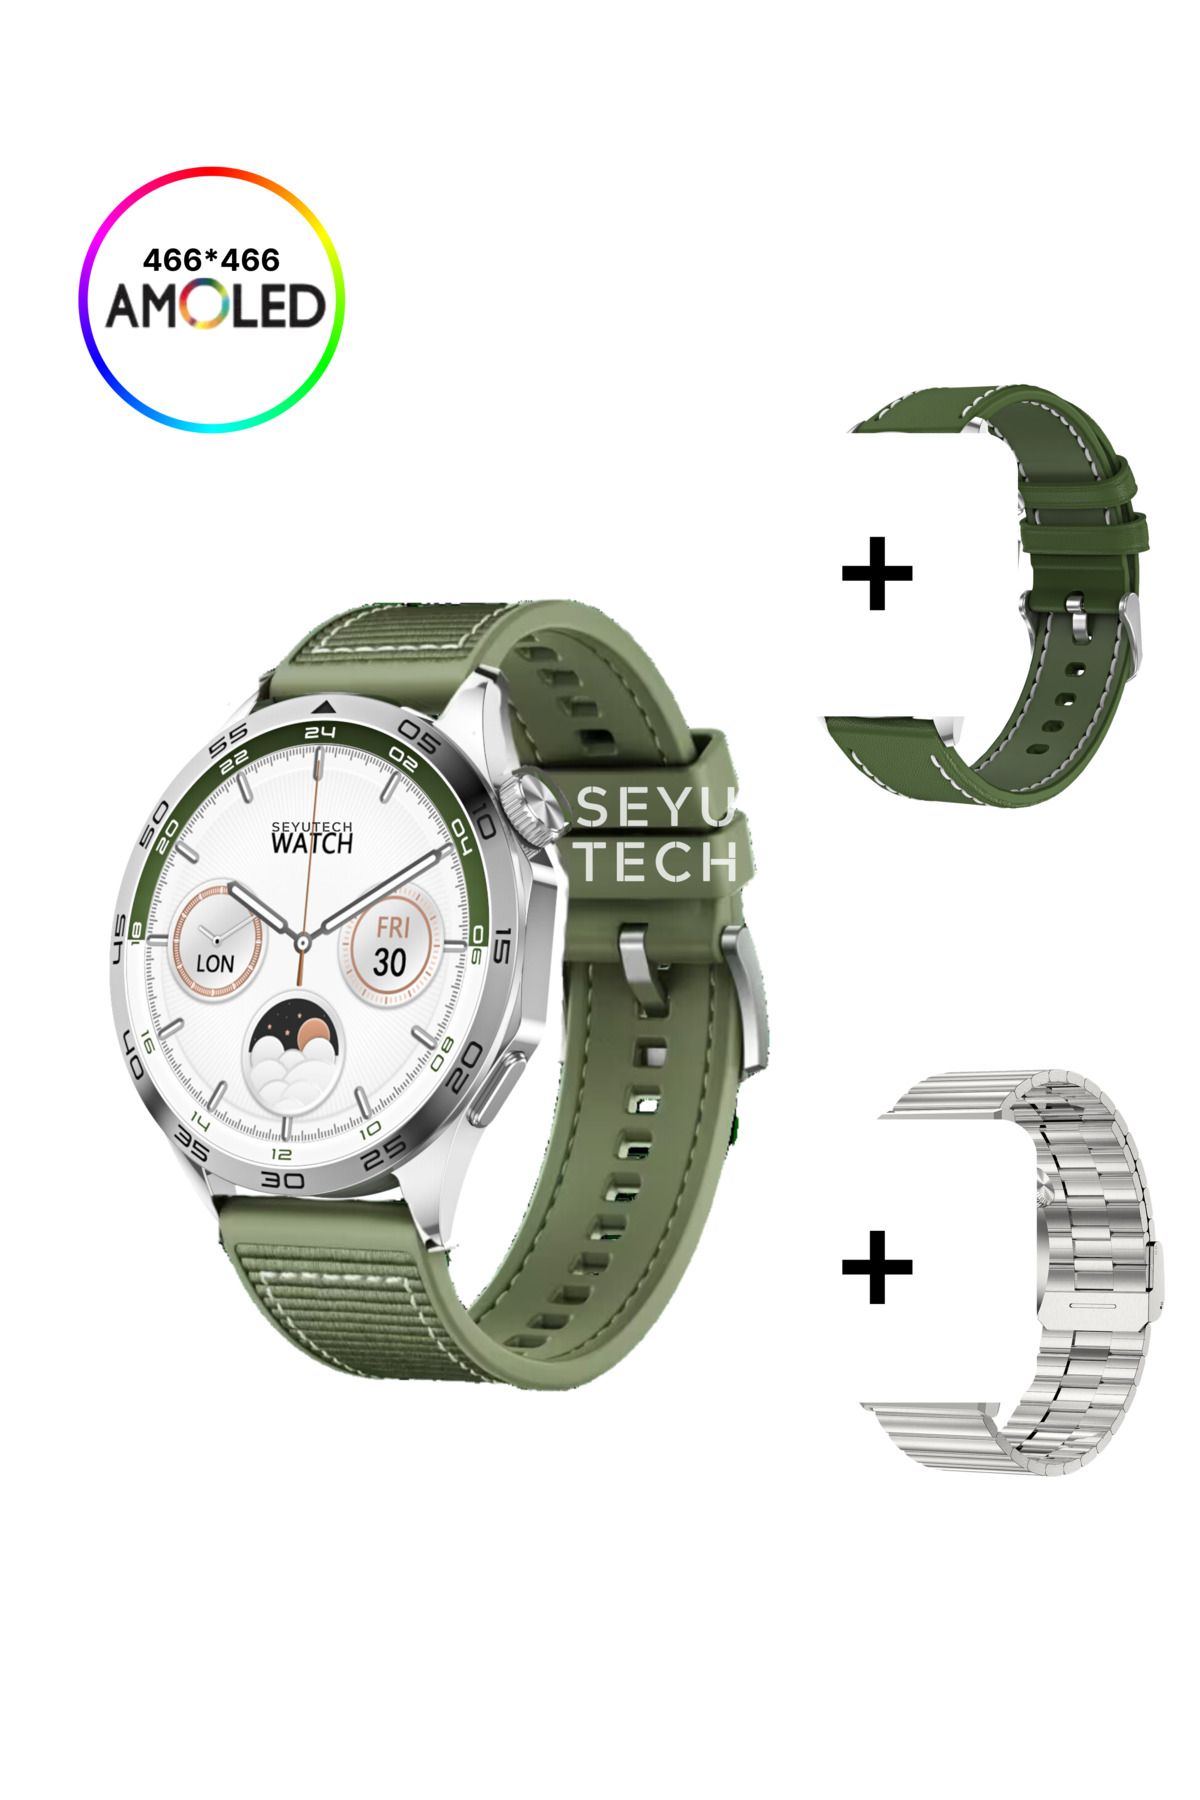 SeyuTech Watch 4 GT Amoled Akıllı Saat Iphone Ve Android Tüm Telefonlara Uyumlu Smartwatch